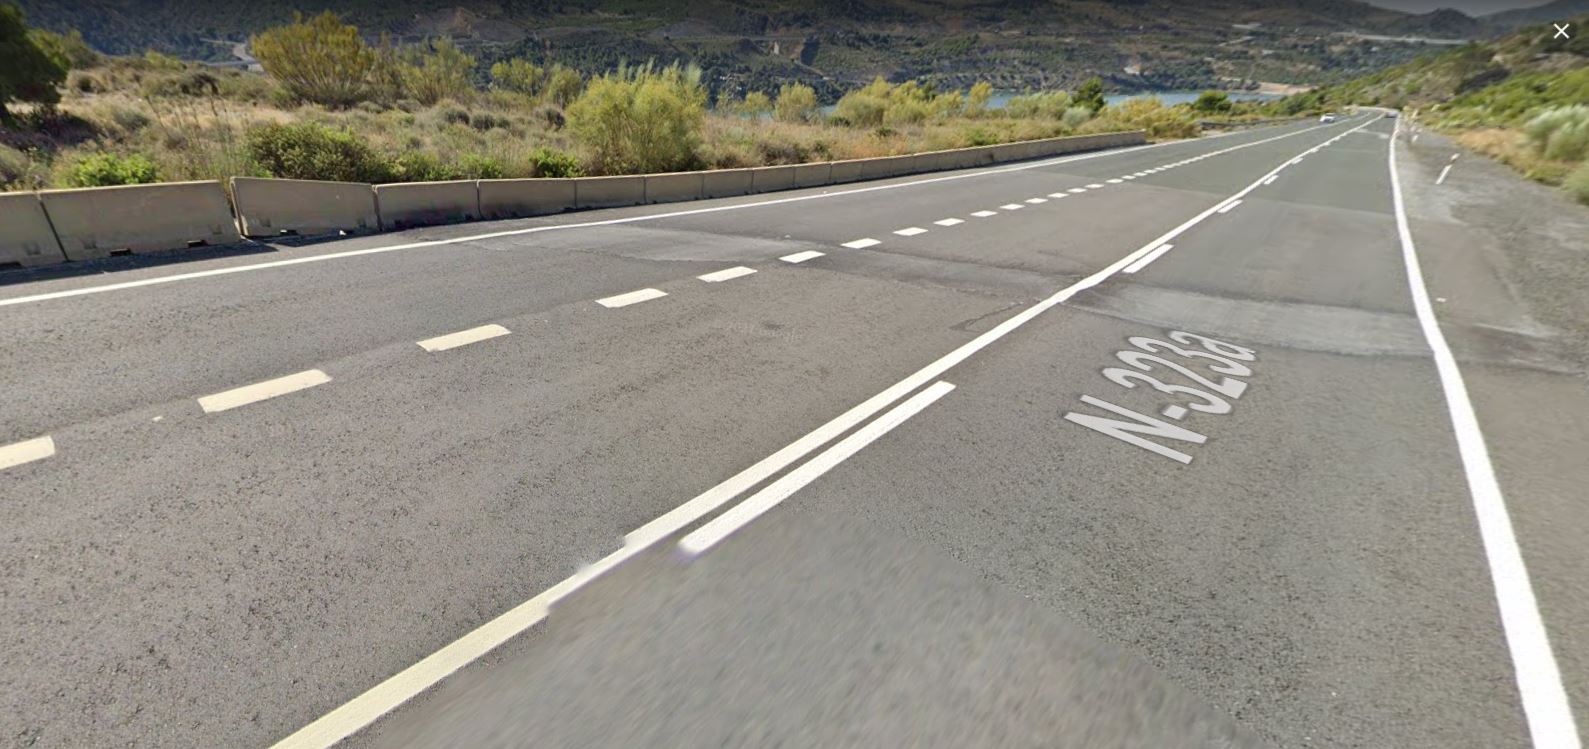 June 2021 Google Street View image of the lateral scarp of the El Arrecife Landslide in Spain.